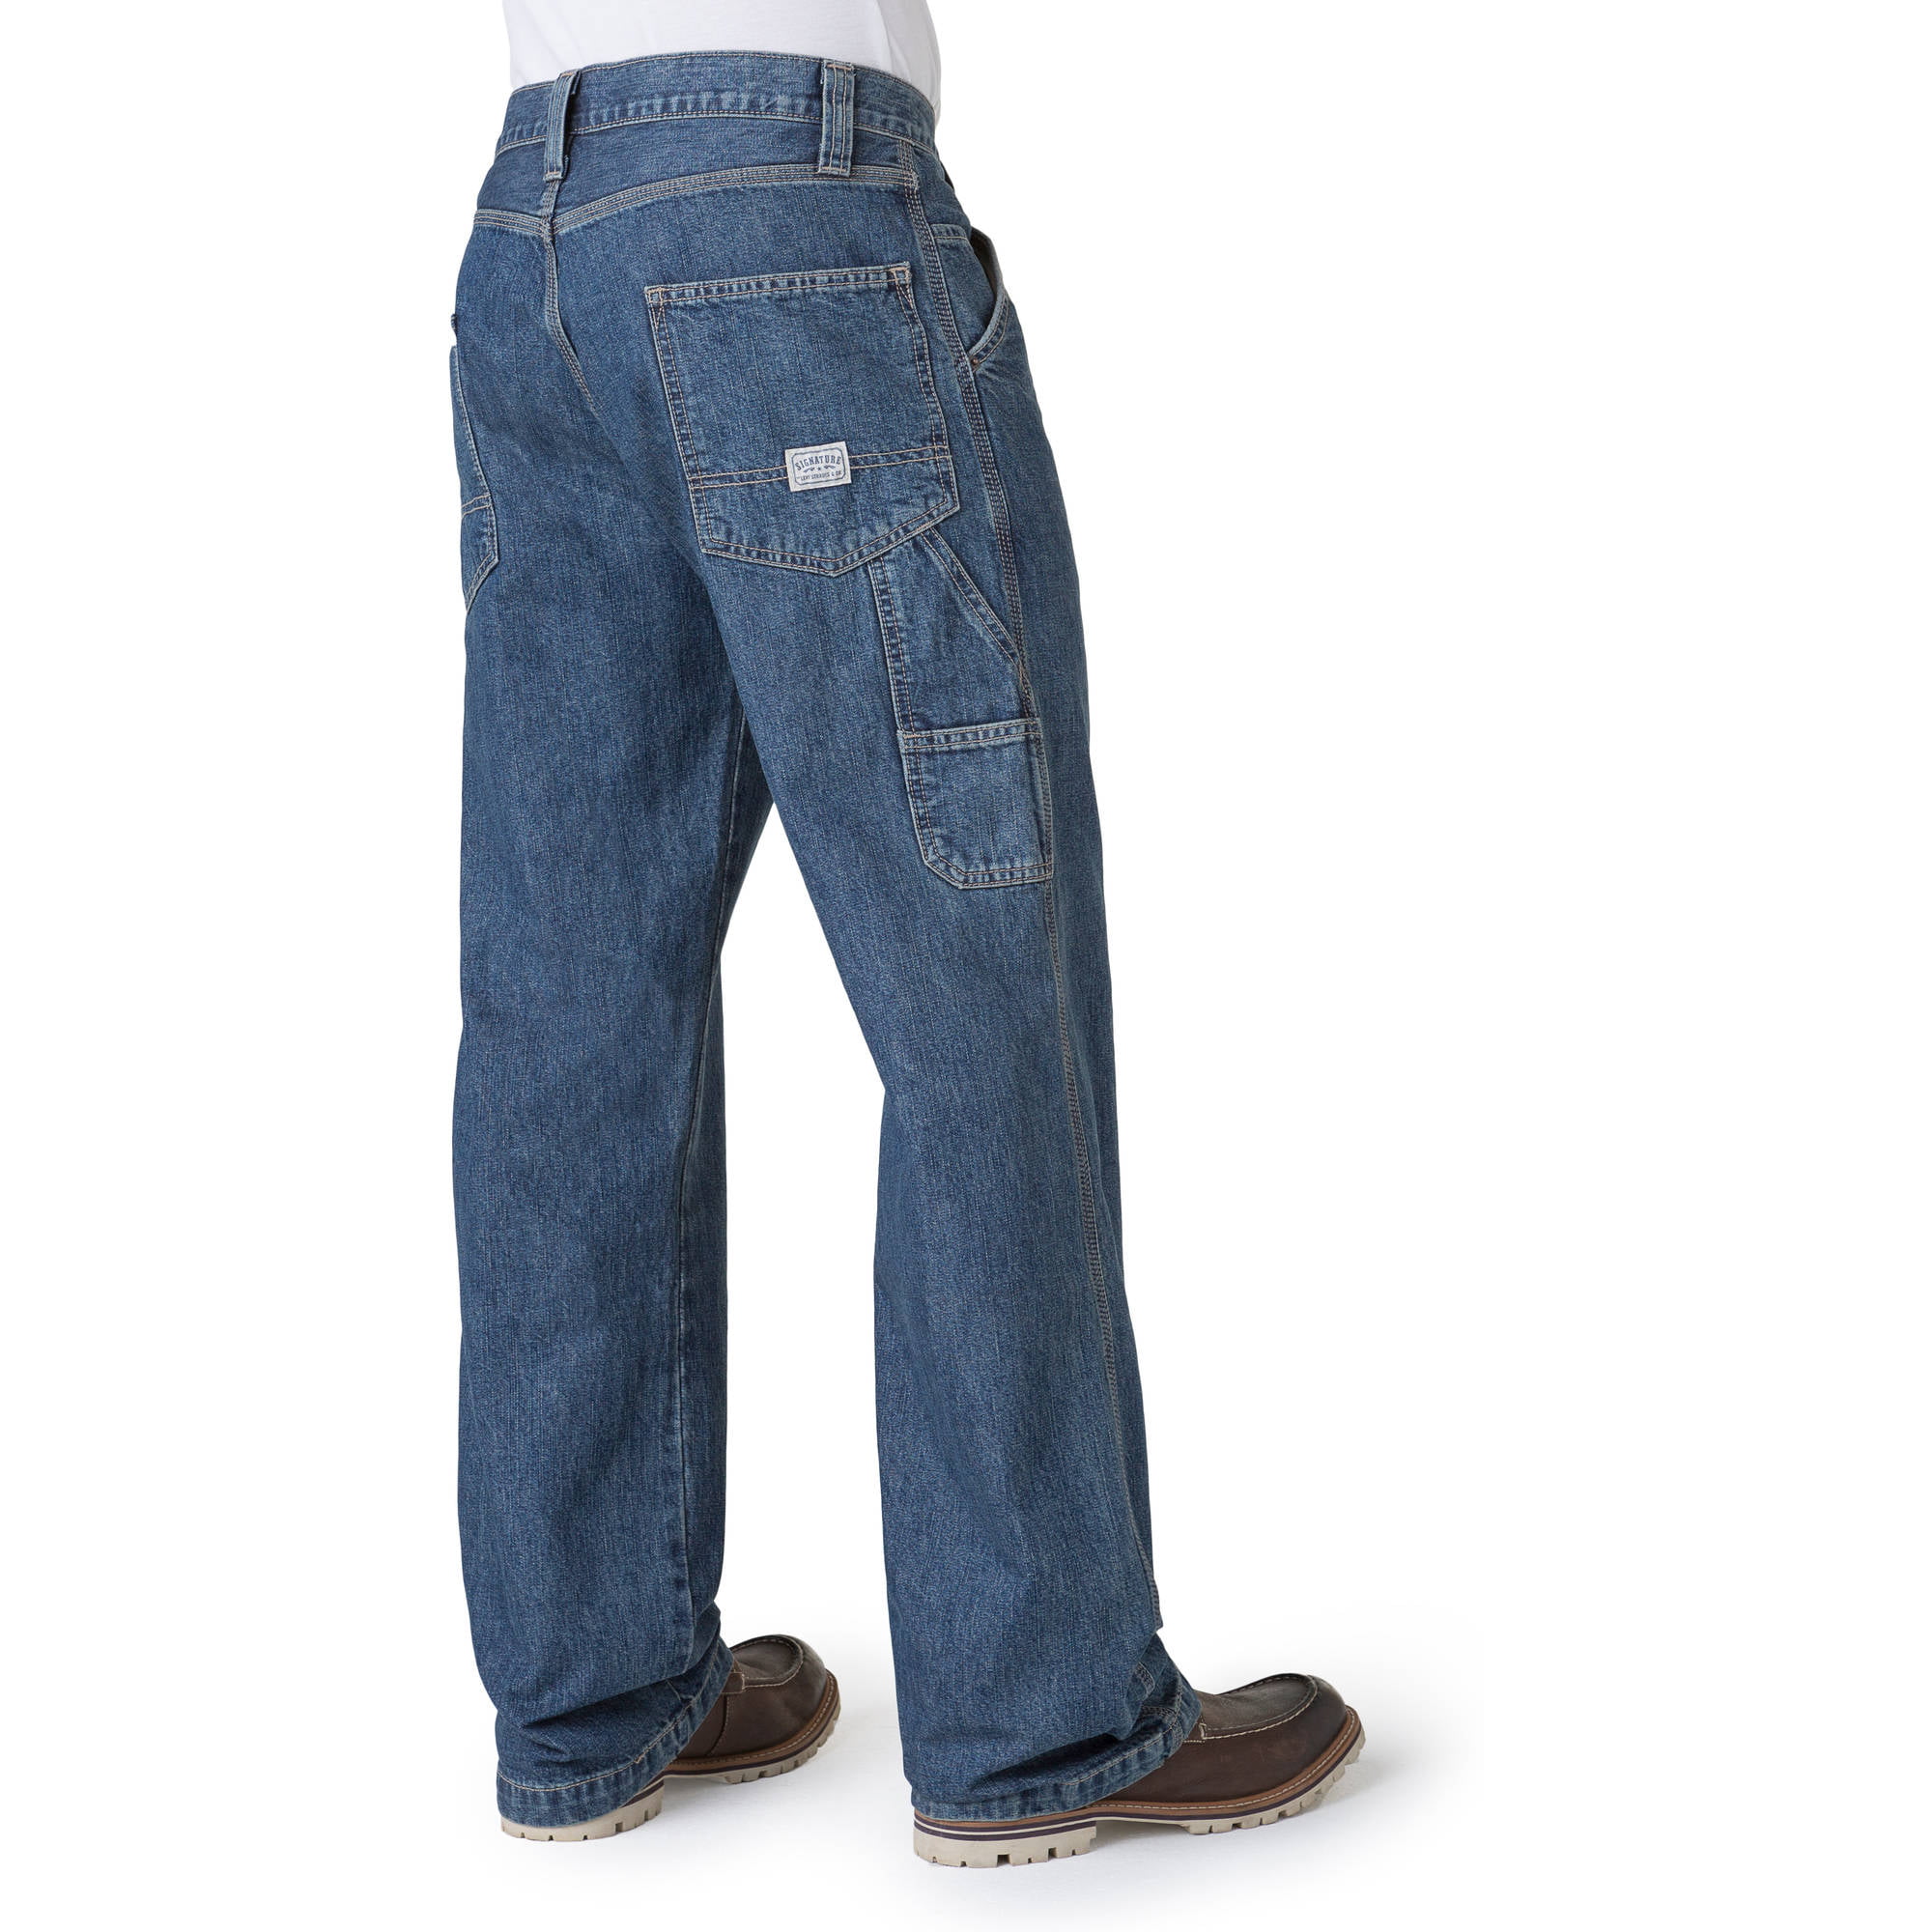 does walmart carry levi jeans